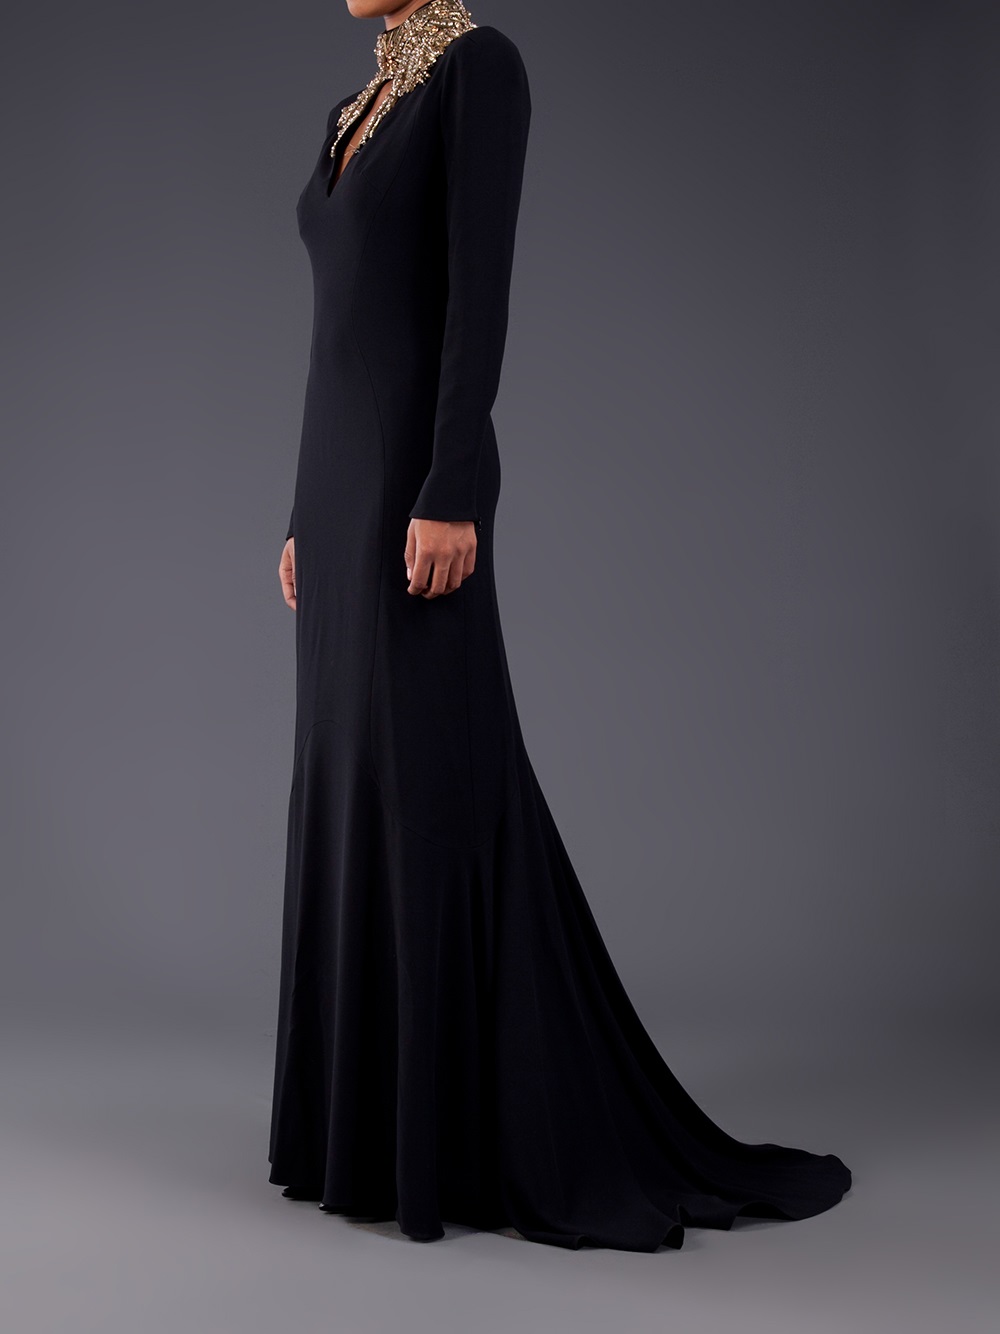 Lyst - Alexander Mcqueen Embellished High Neck Gown in Black